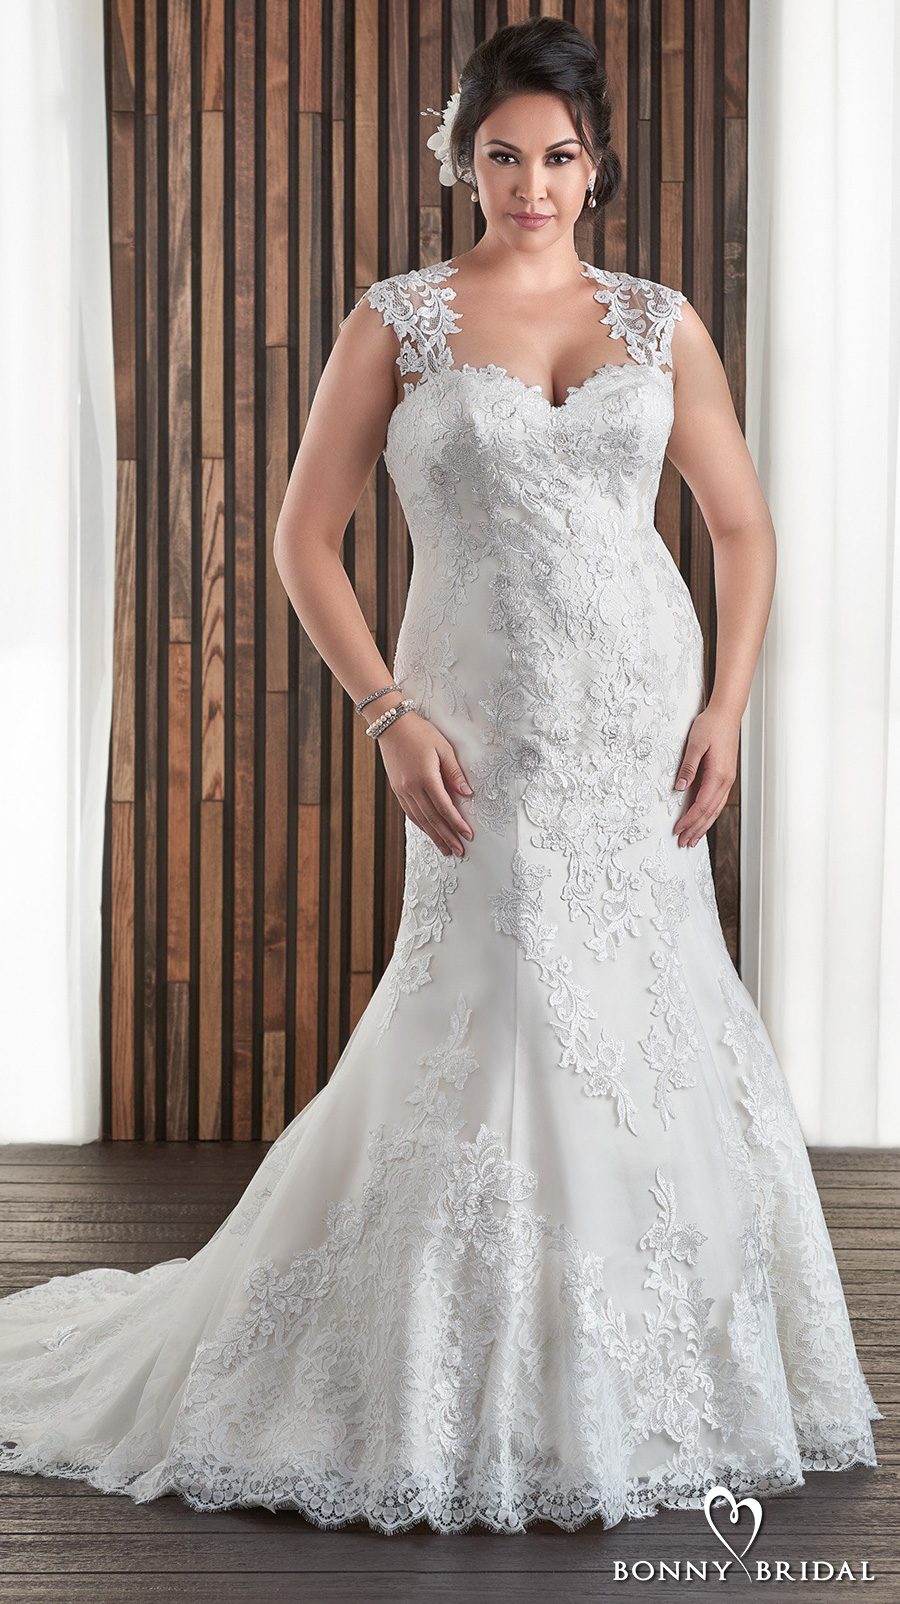 Bonny Bridal Wedding Dresses — Unforgettable Styles For